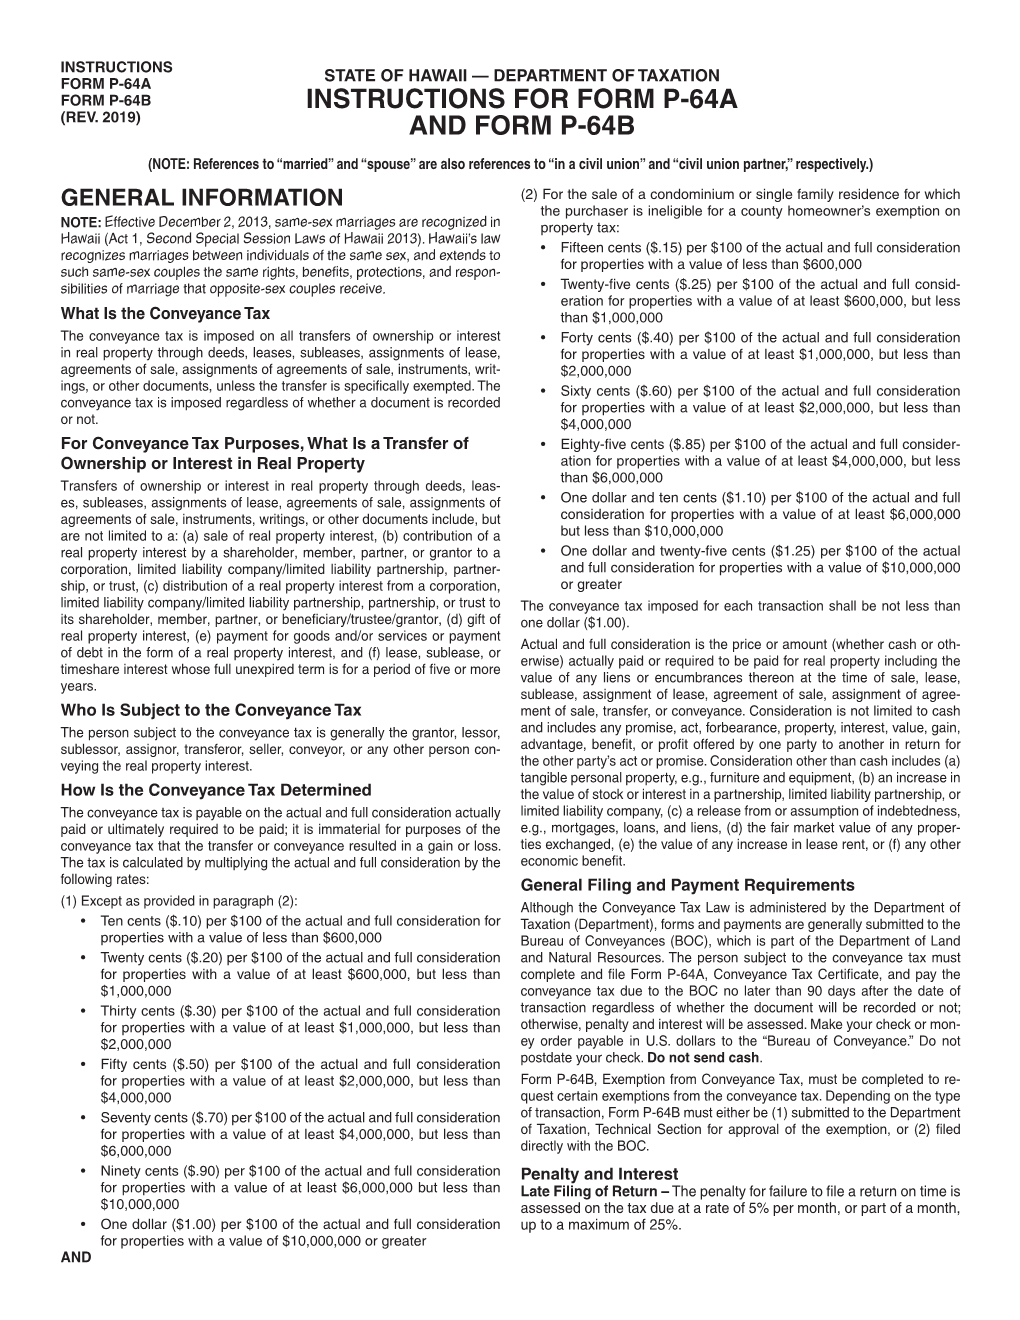 Instructions for Form P-64A/P-64B (Rev 2019)